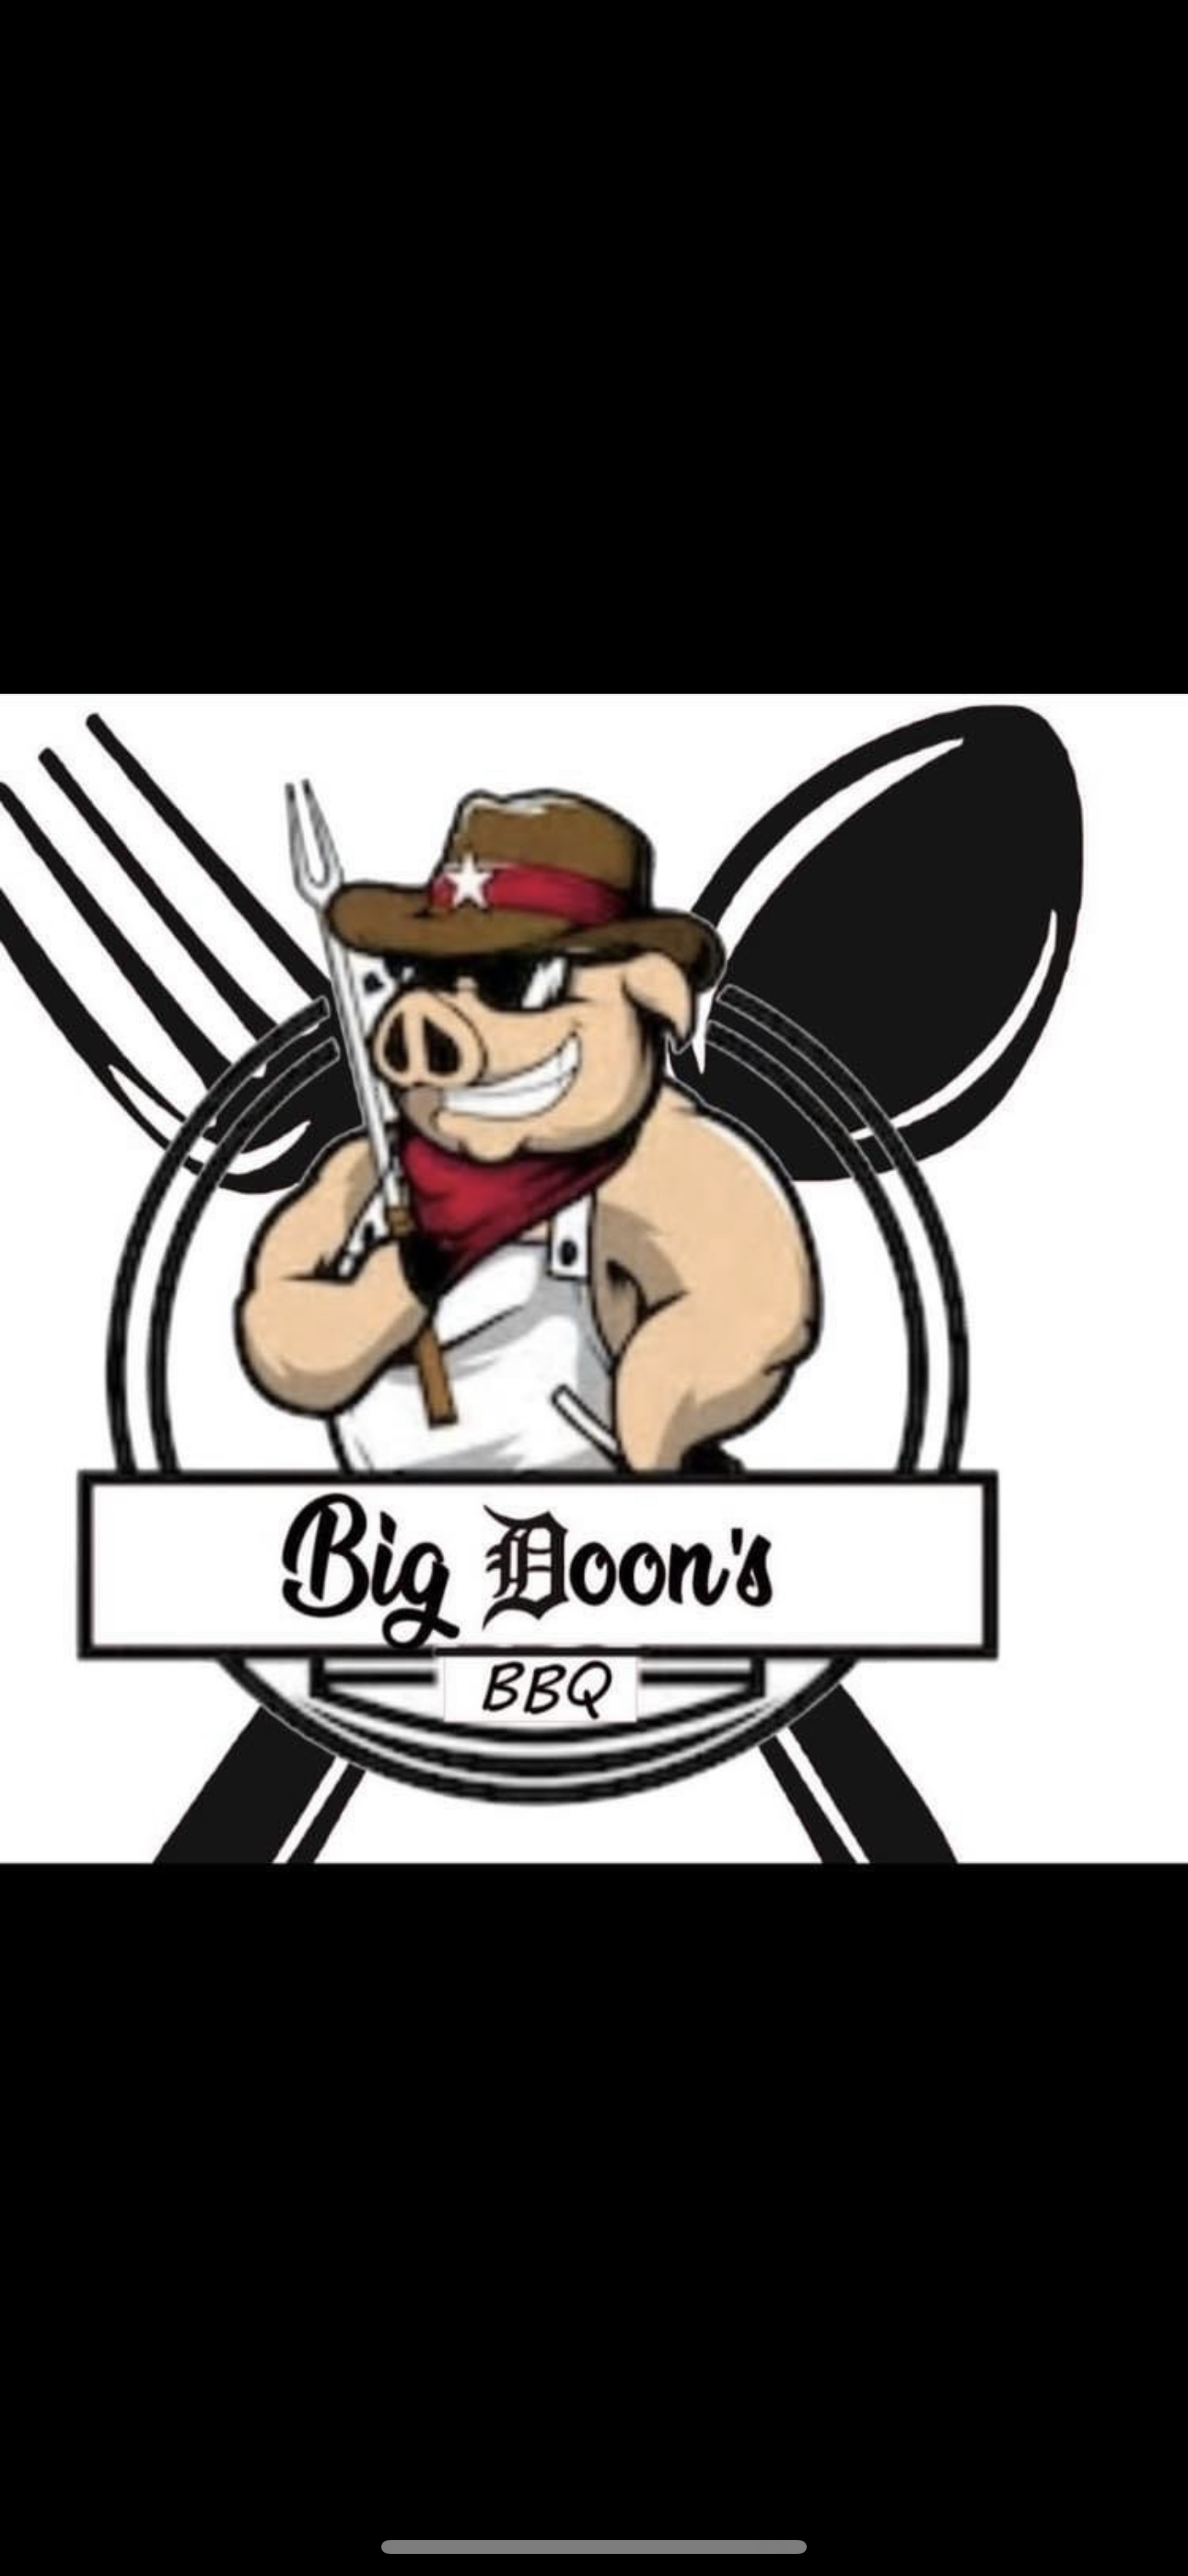 Big Doon's BBQ Inc